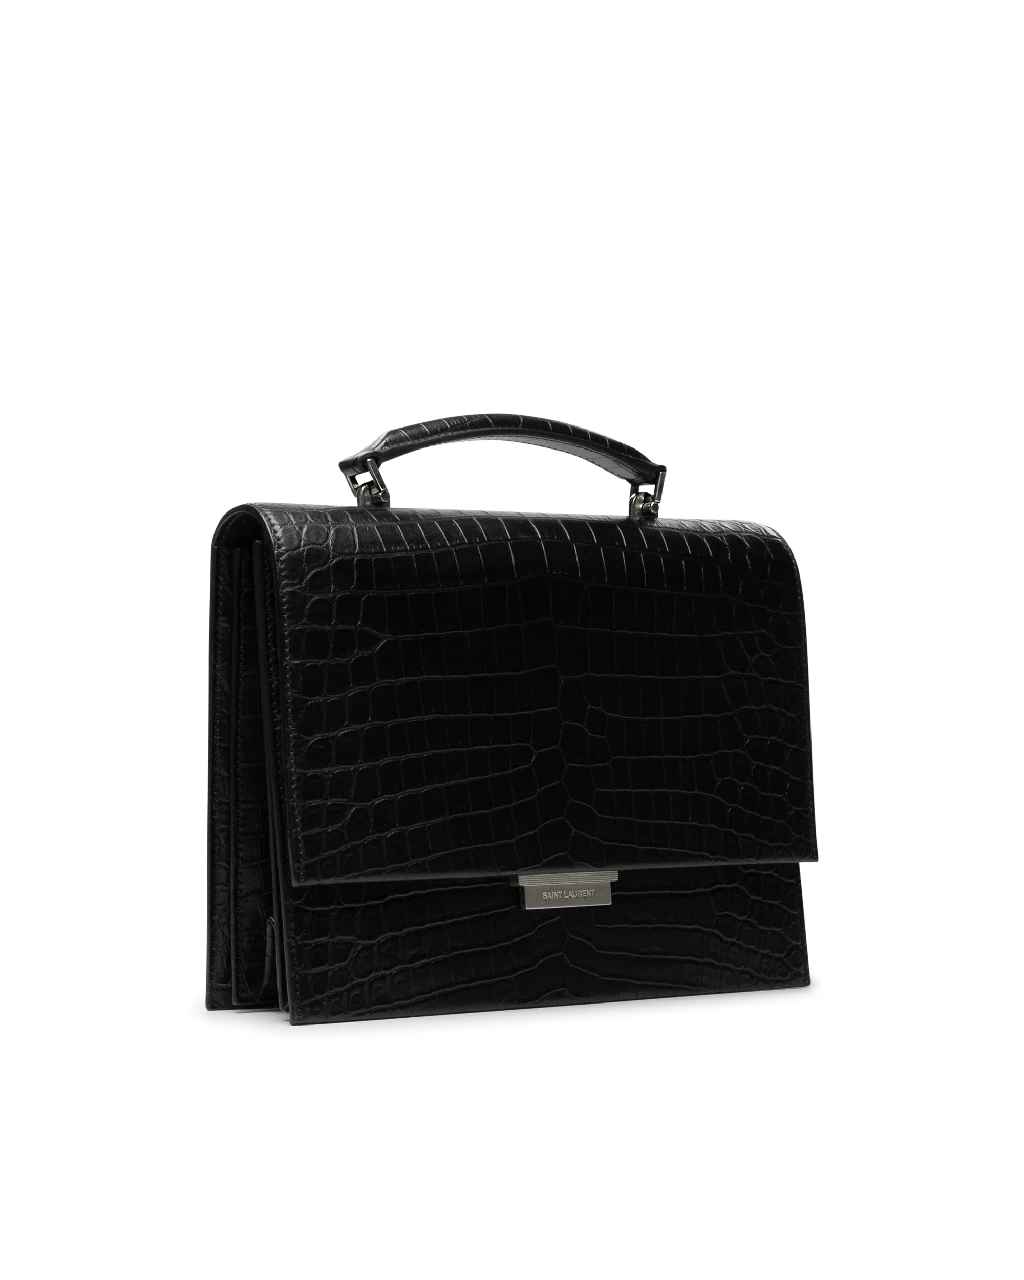 Saint Laurent Babylone Top Handle Bag Crocodile Embossed Leather Medium